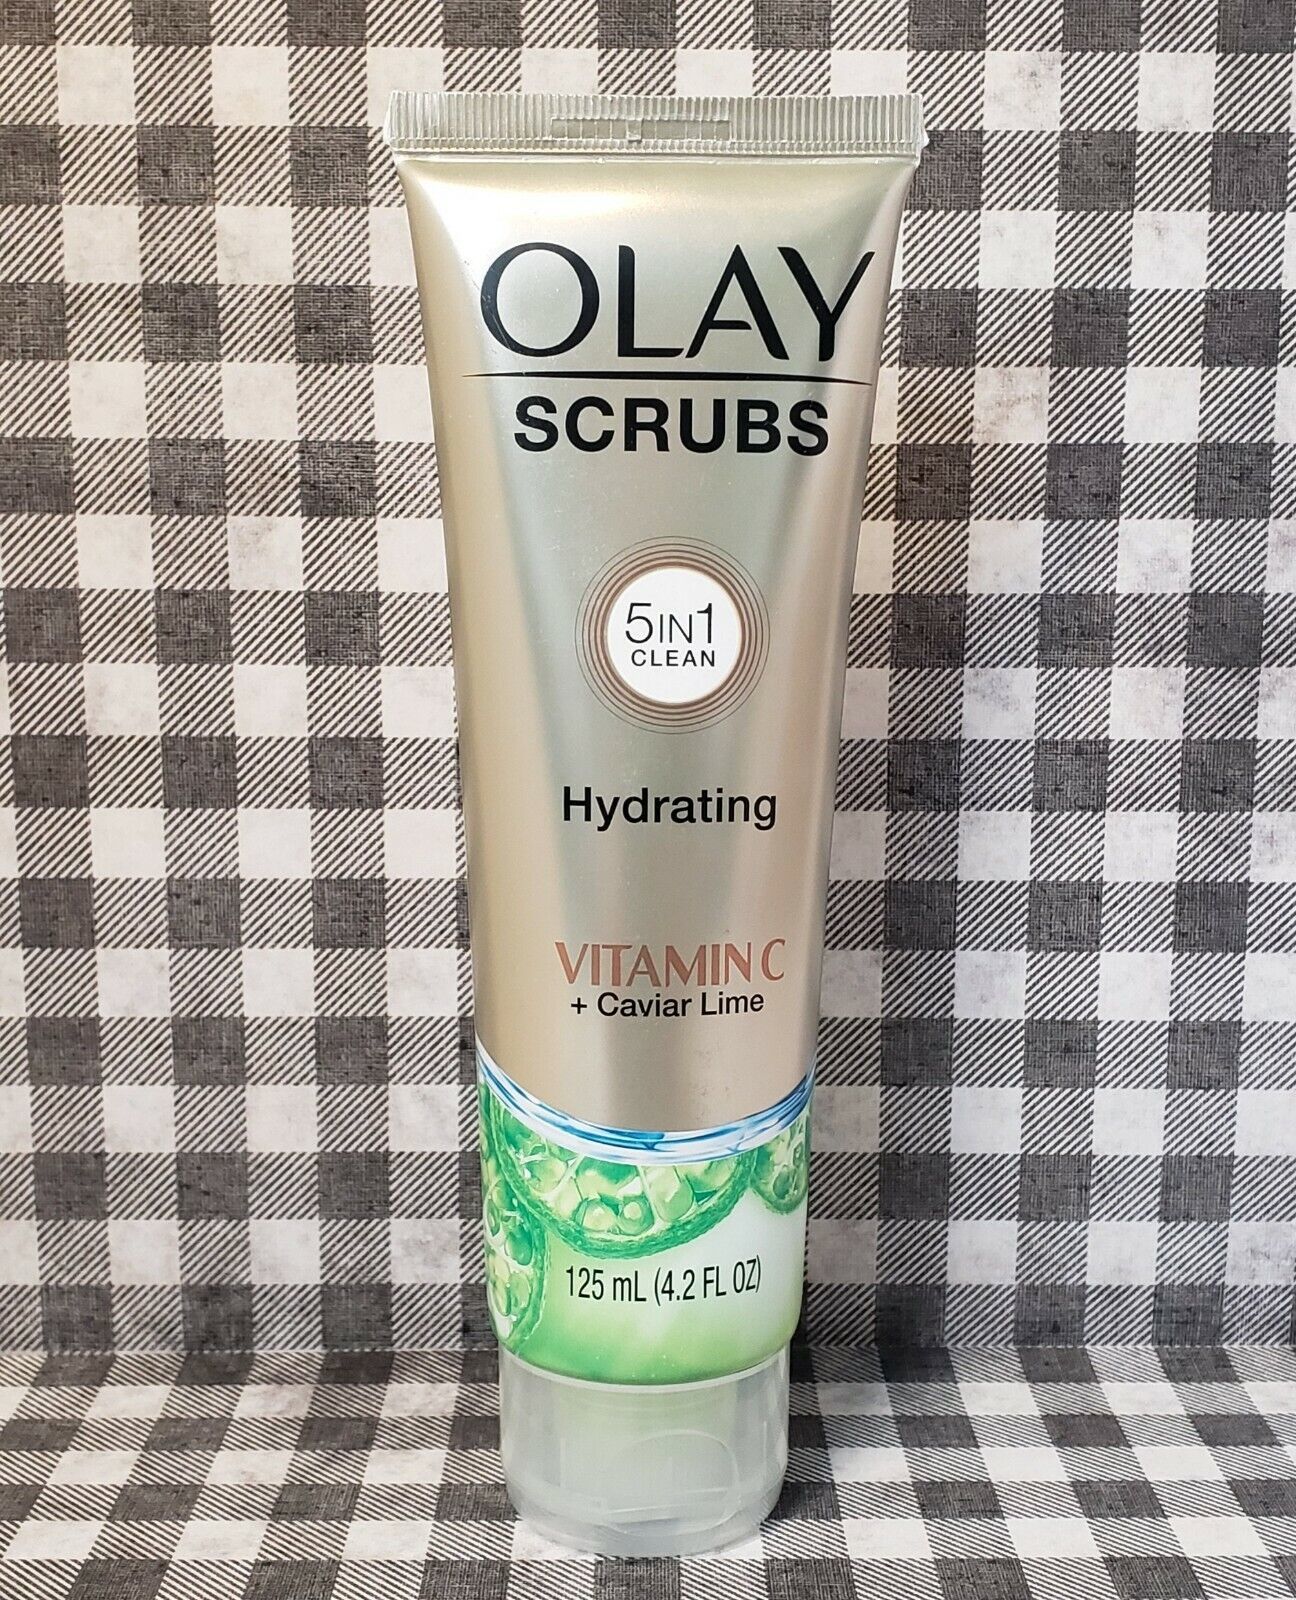 Olay Scrubs Hydrating Vitamin C + Caviar Lime 5 in 1 Face Cleanser (4.2 fl. oz.) - $12.60